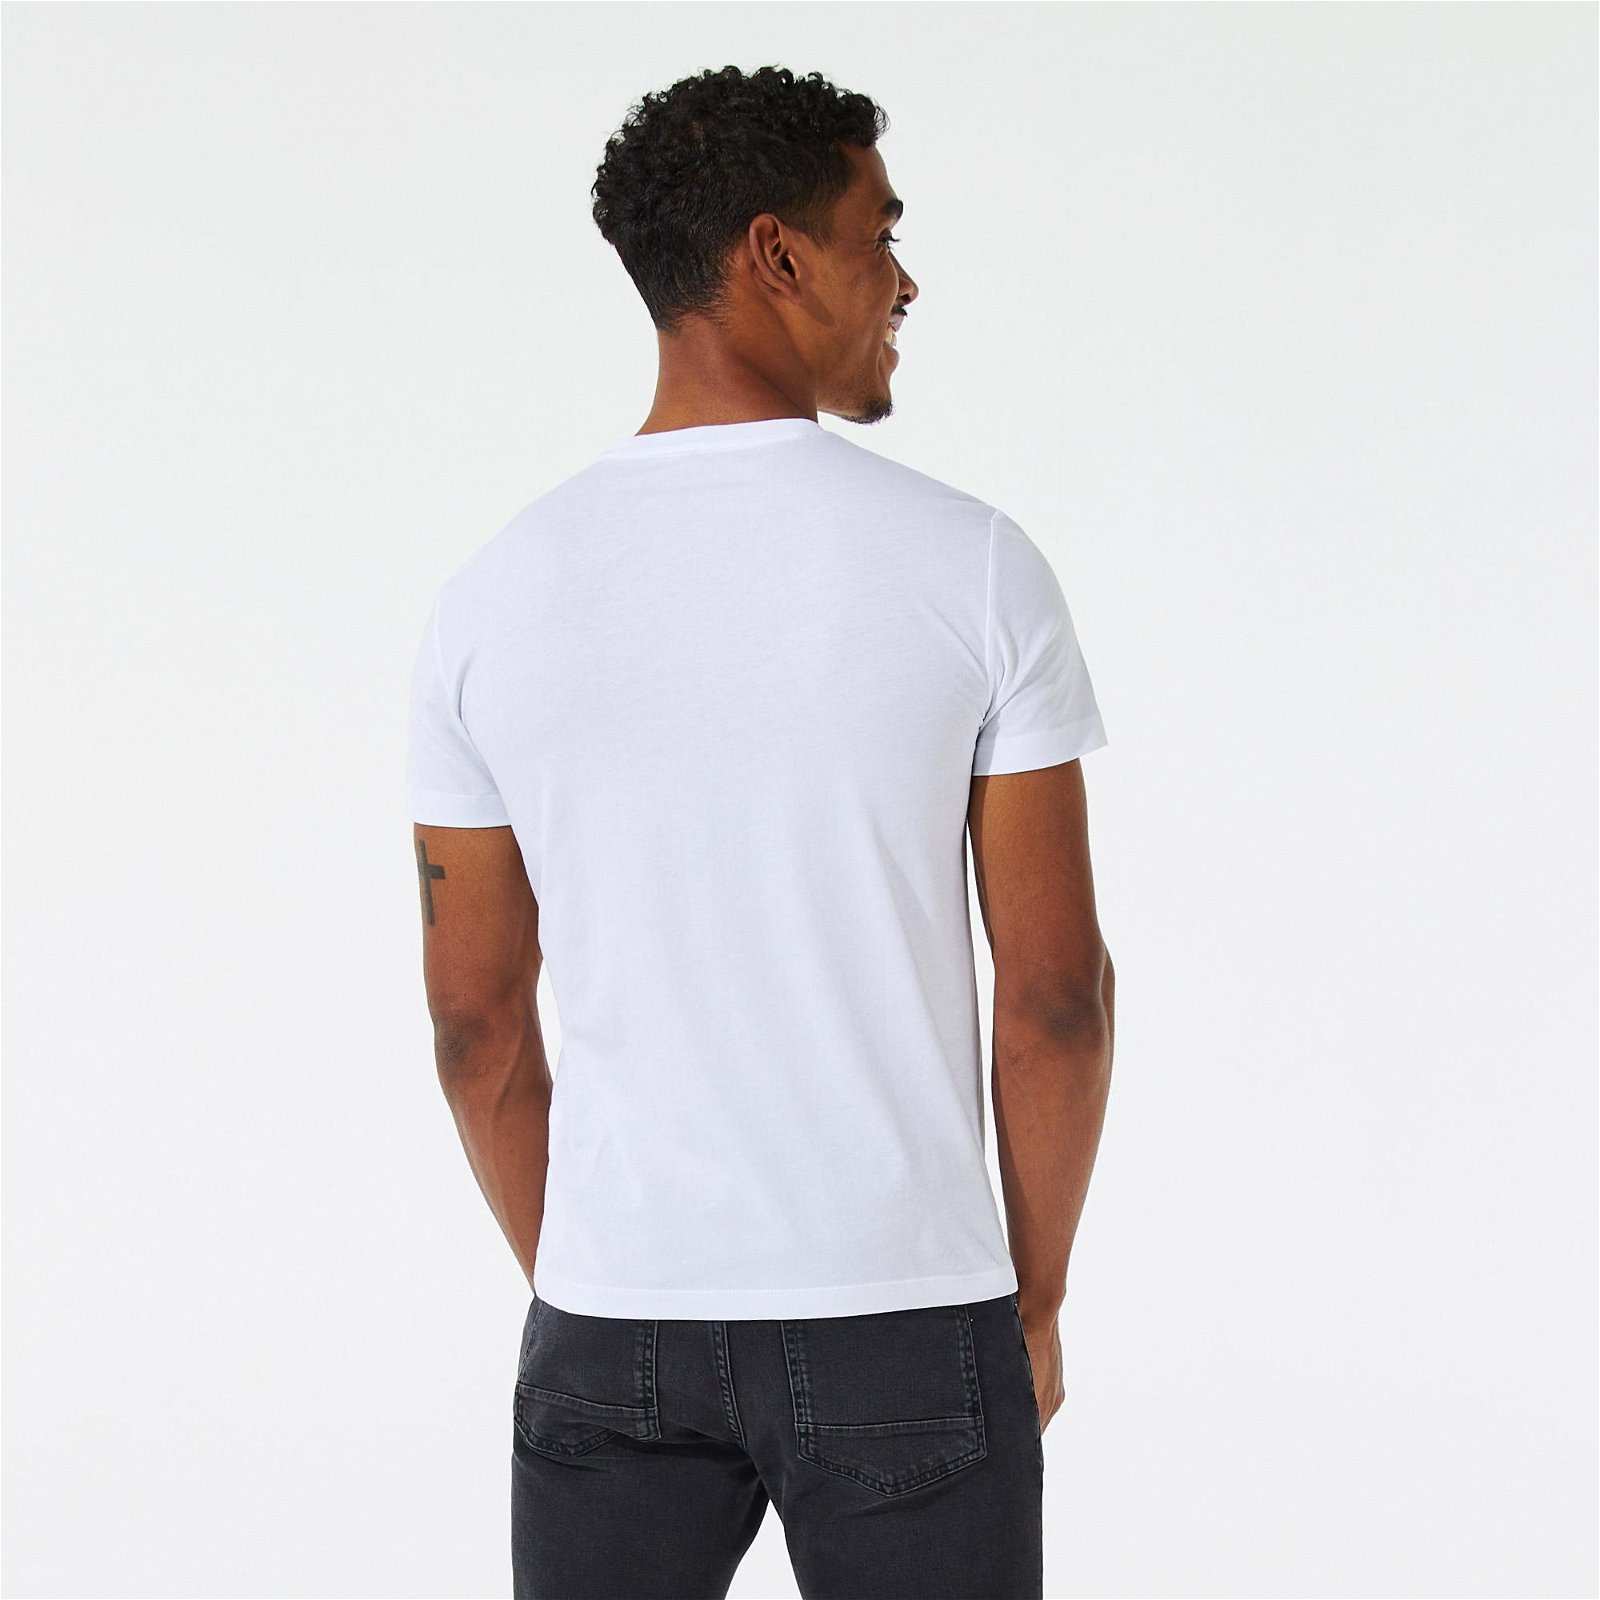 EA7 Emporio Armani Erkek Beyaz T-Shirt